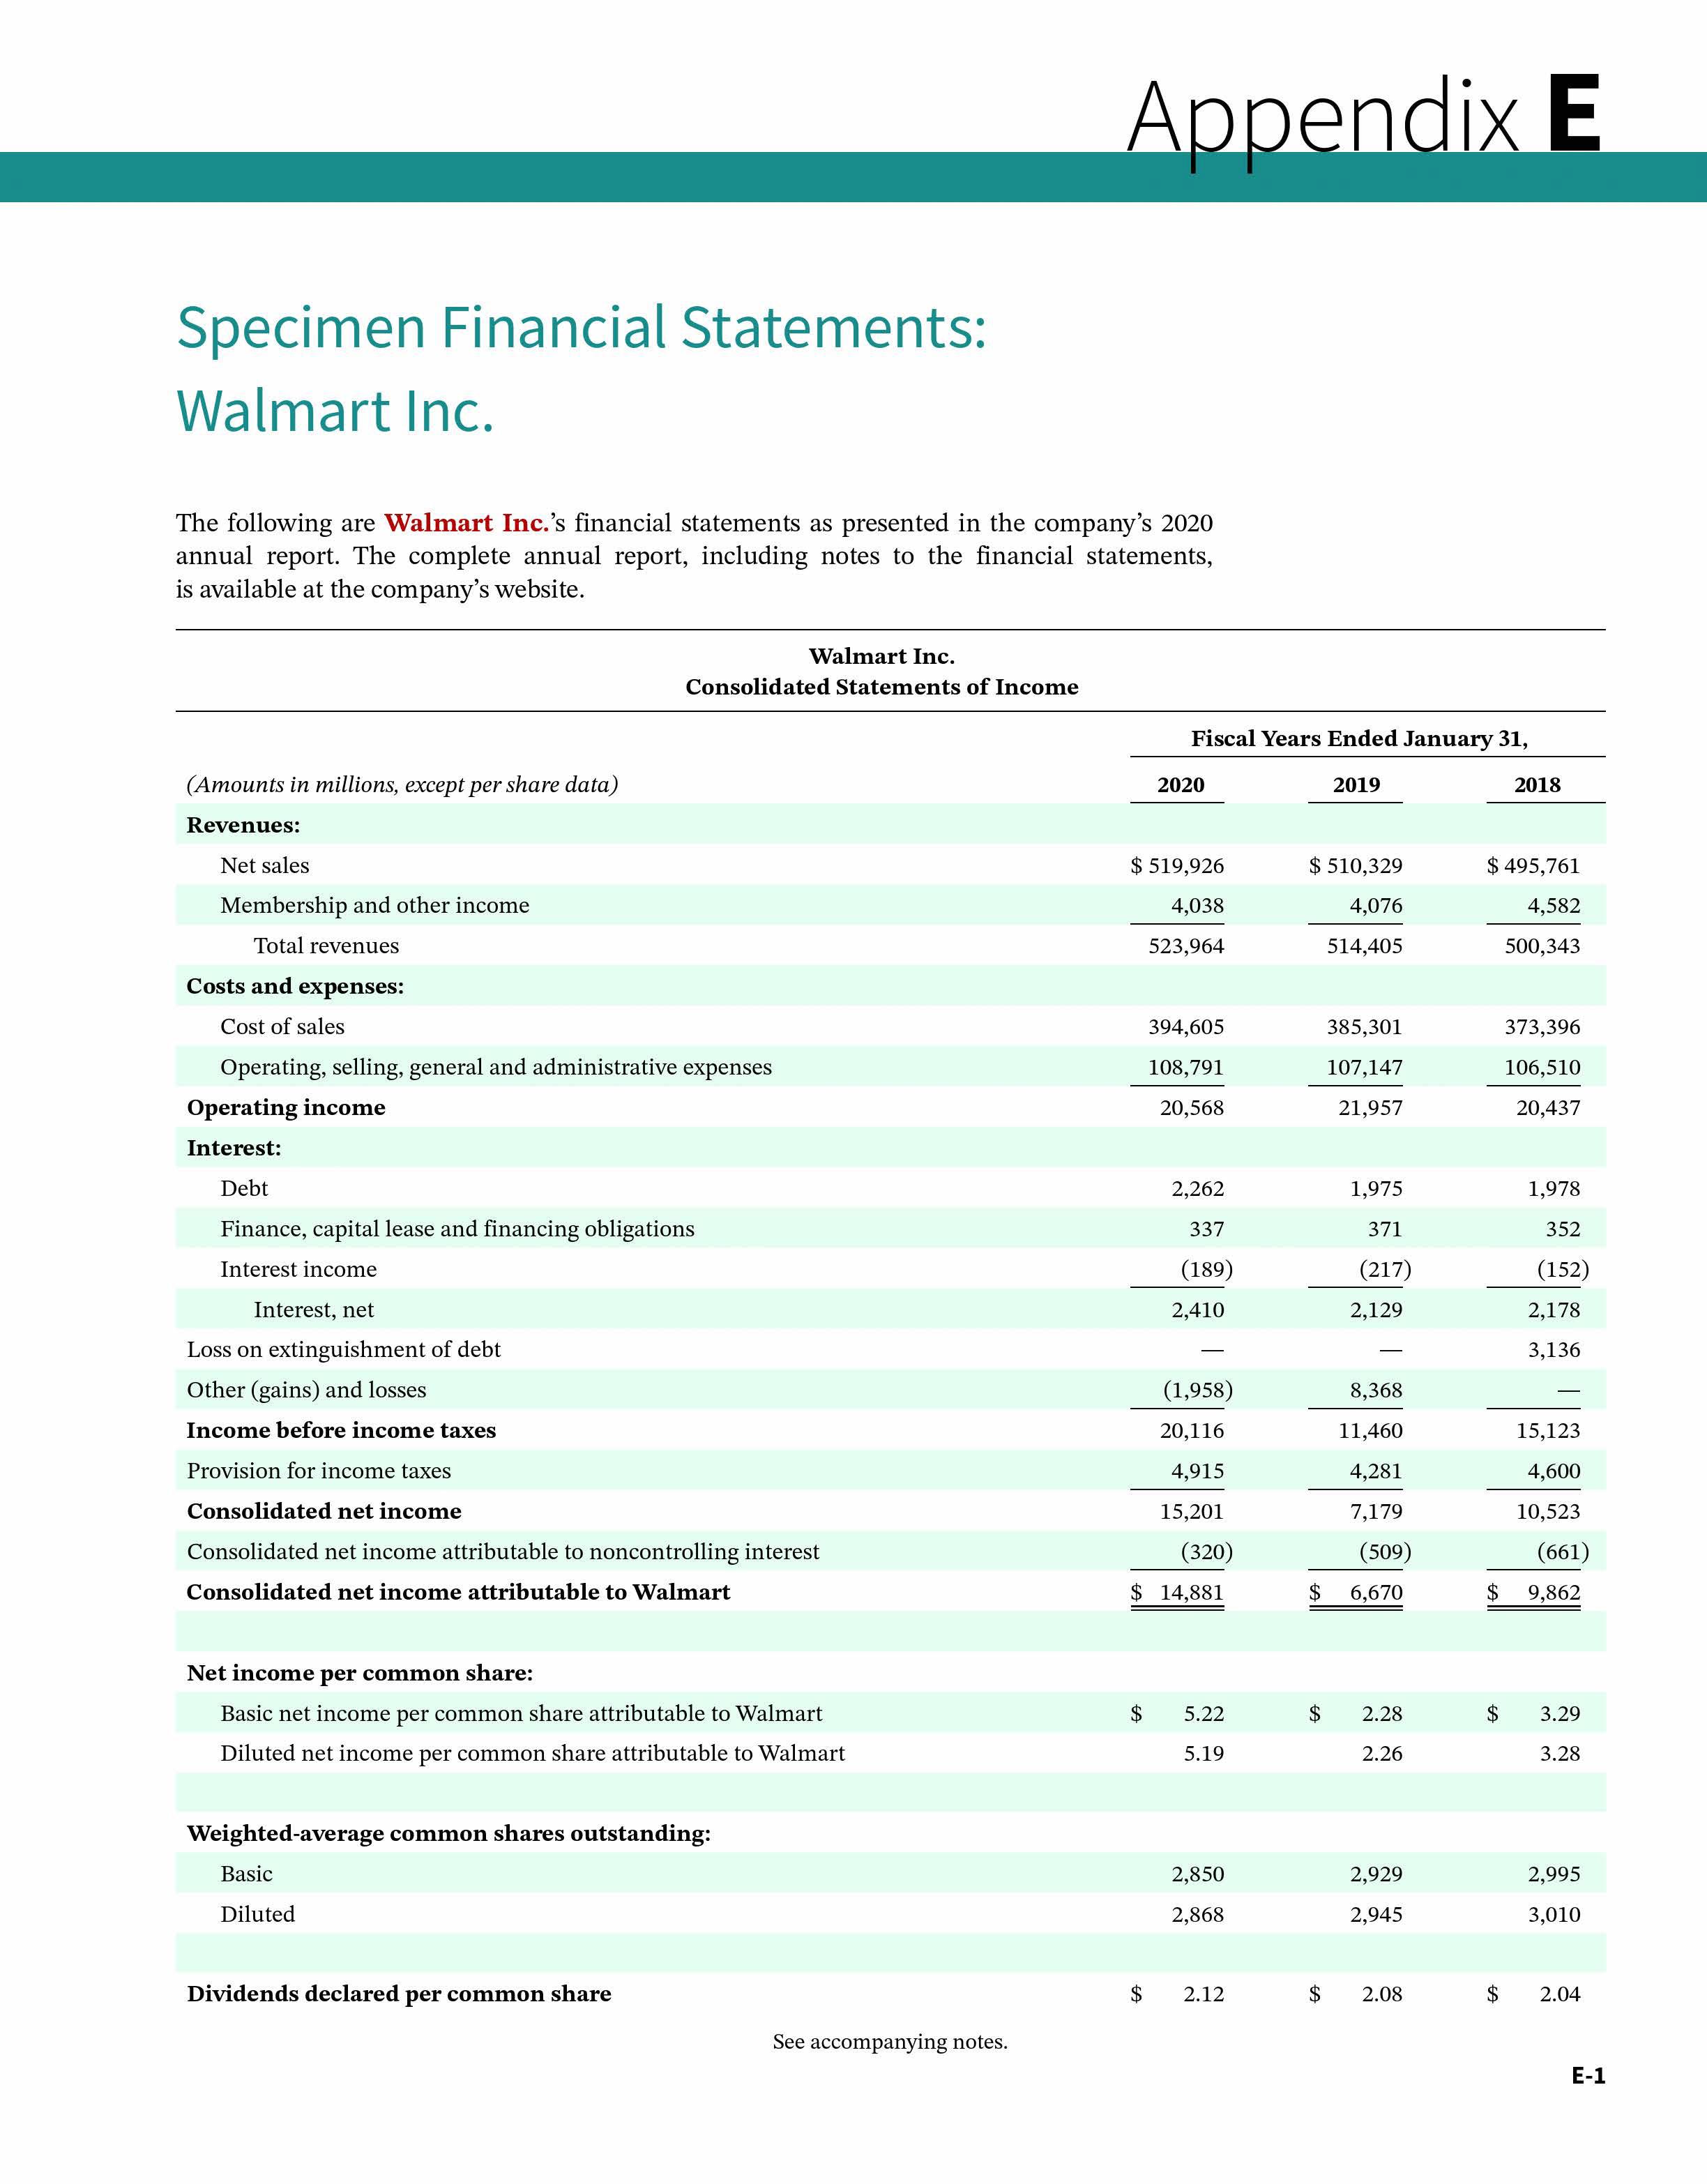 Specimen Financial Statements: Walmart Inc. The following are Walmart Inc.'s financial statements as